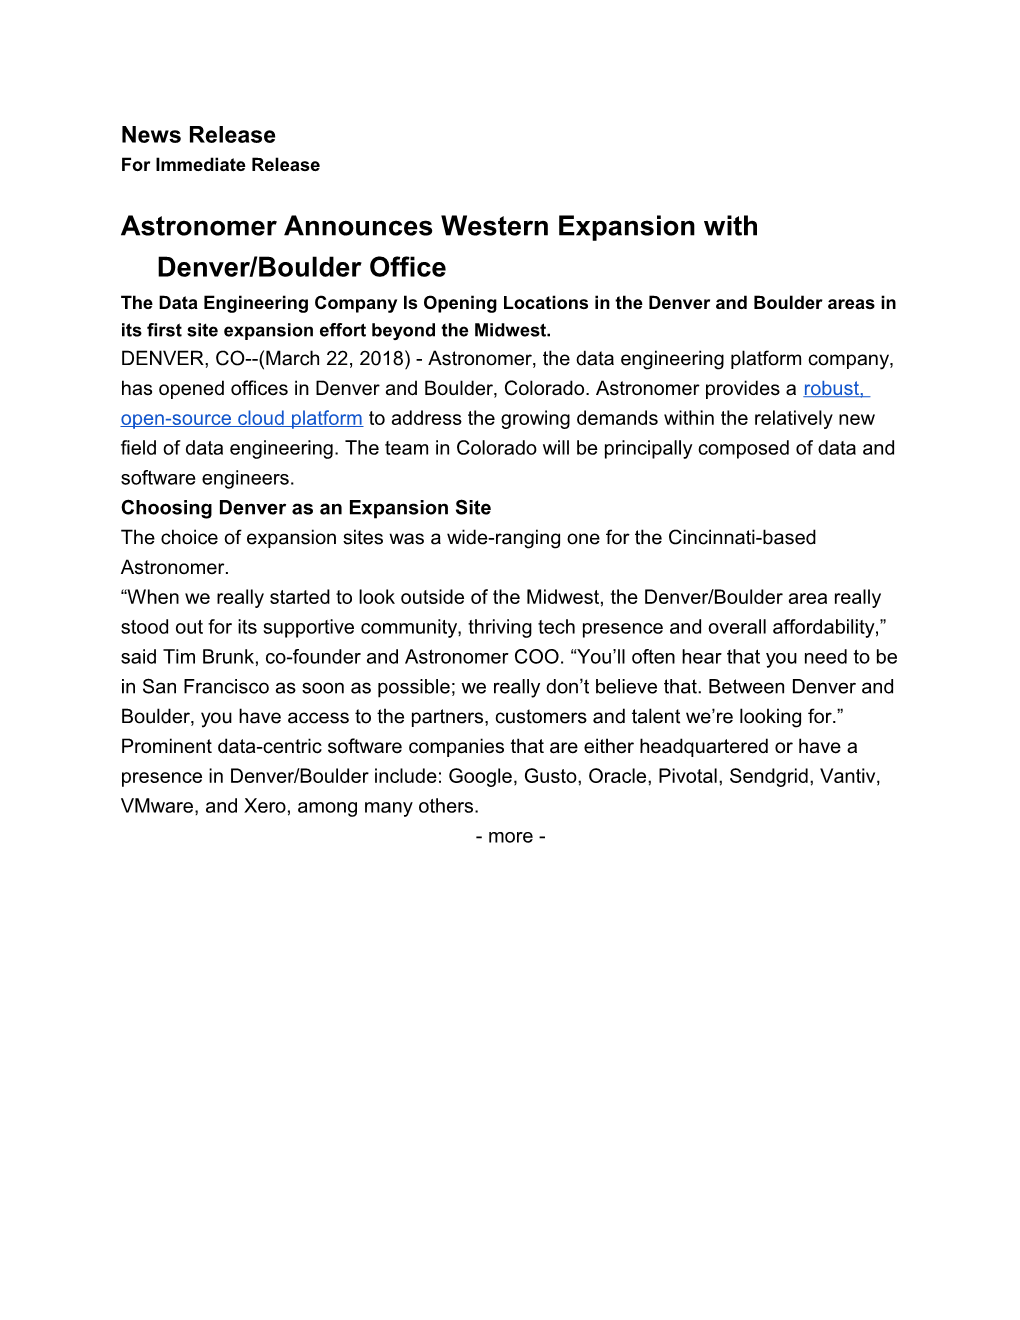 Astronomer Announces Western Expansion with Denver/Boulder Office